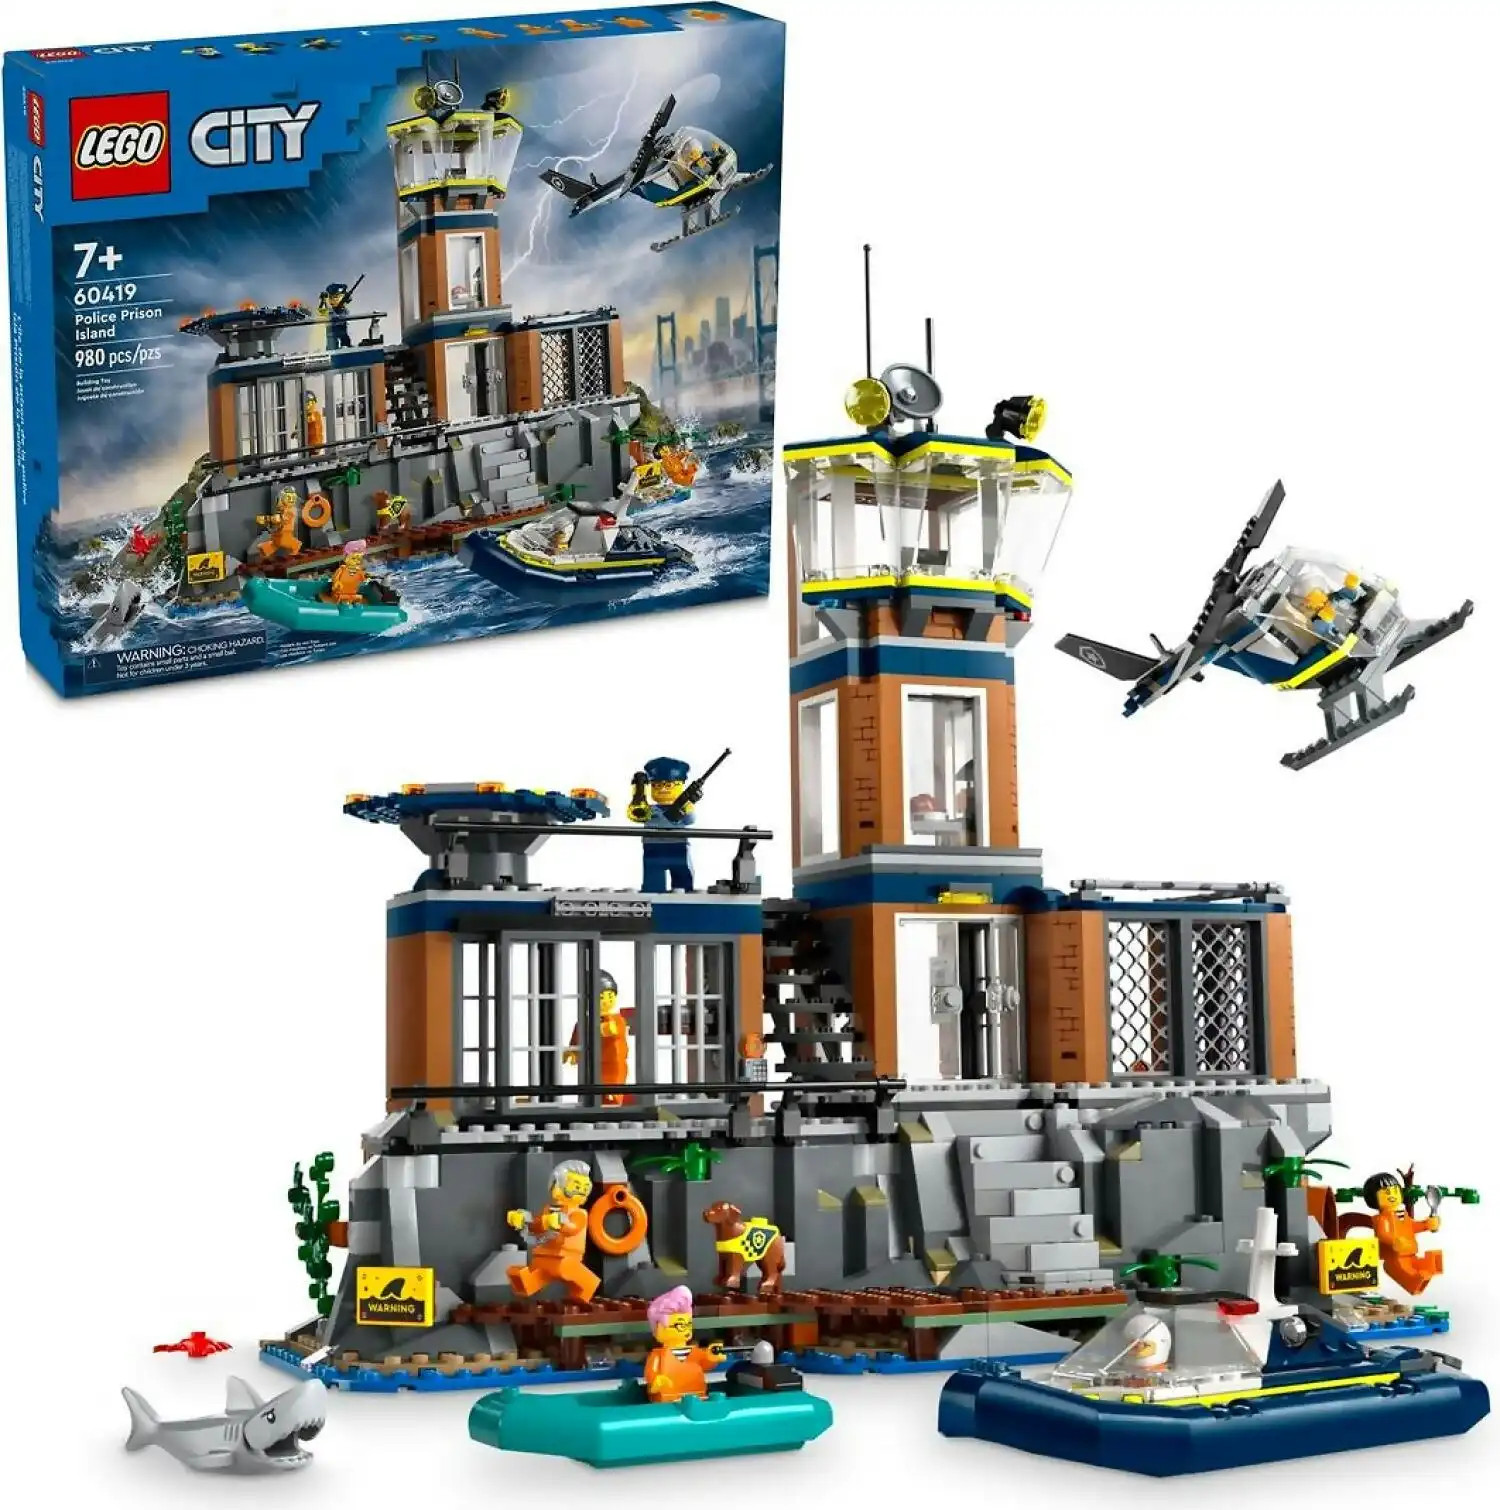 LEGO 60419 Police Prison Island - City